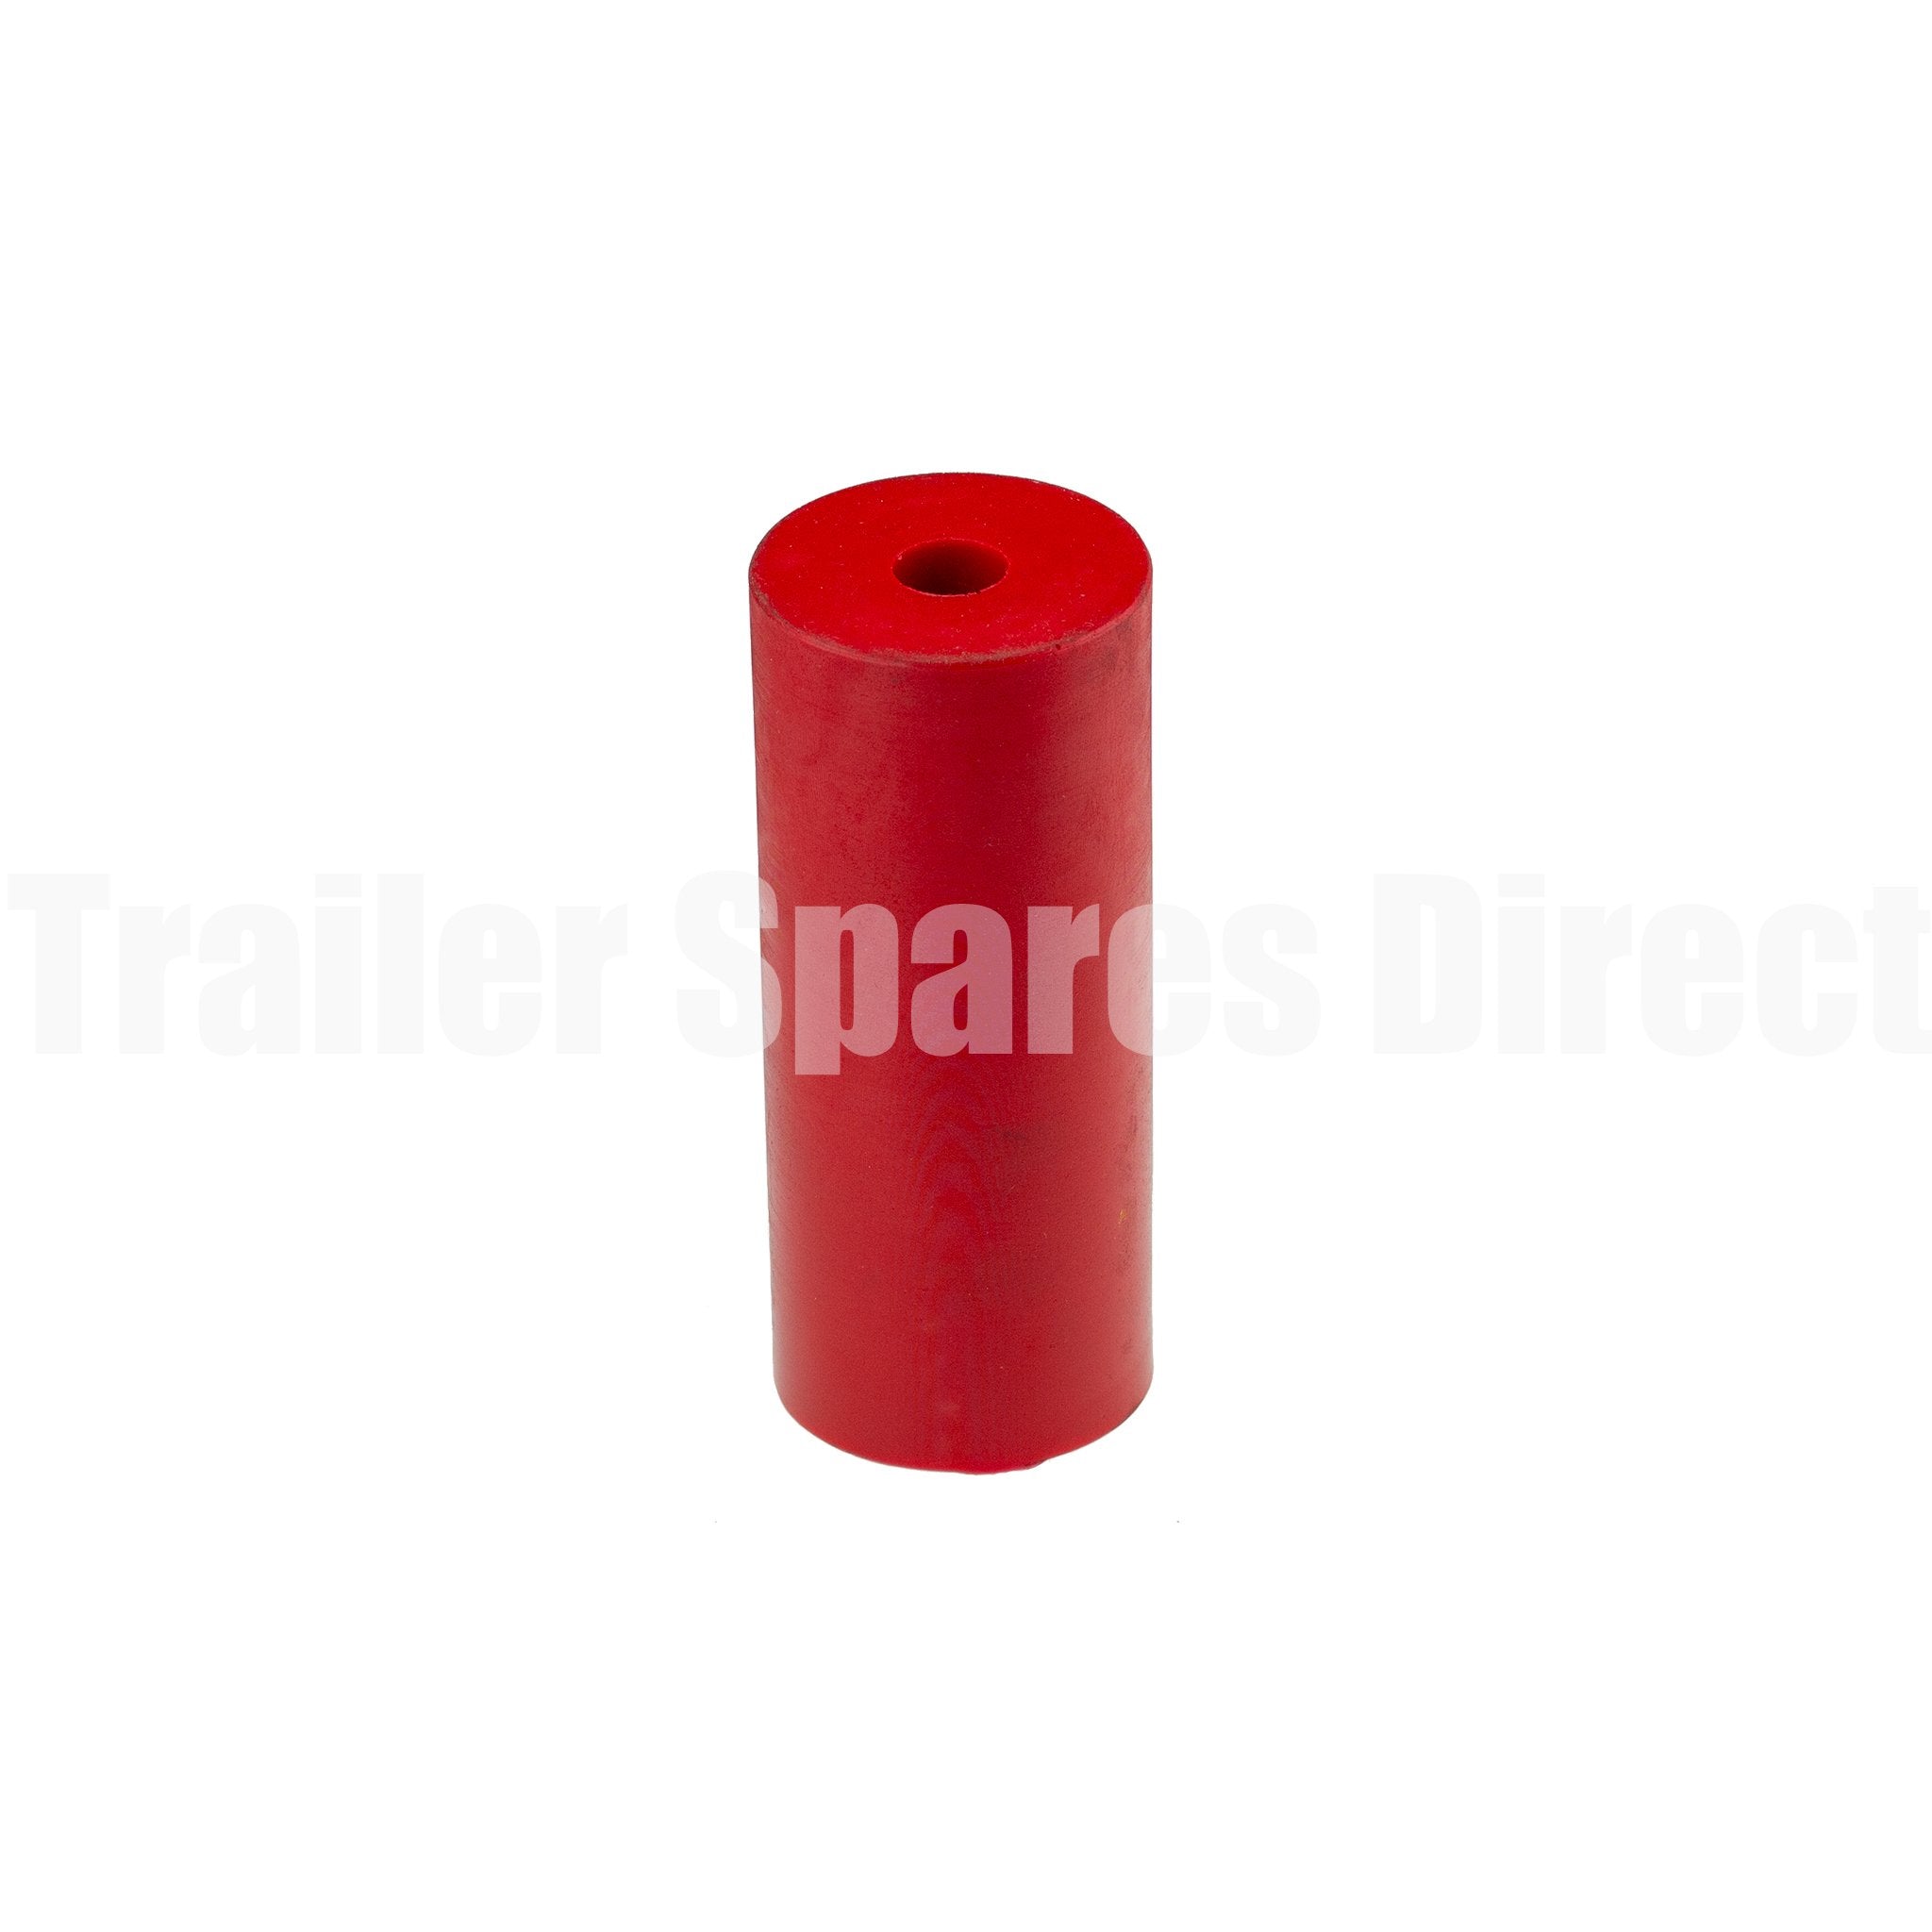 Bilge roller 6 inch red poly